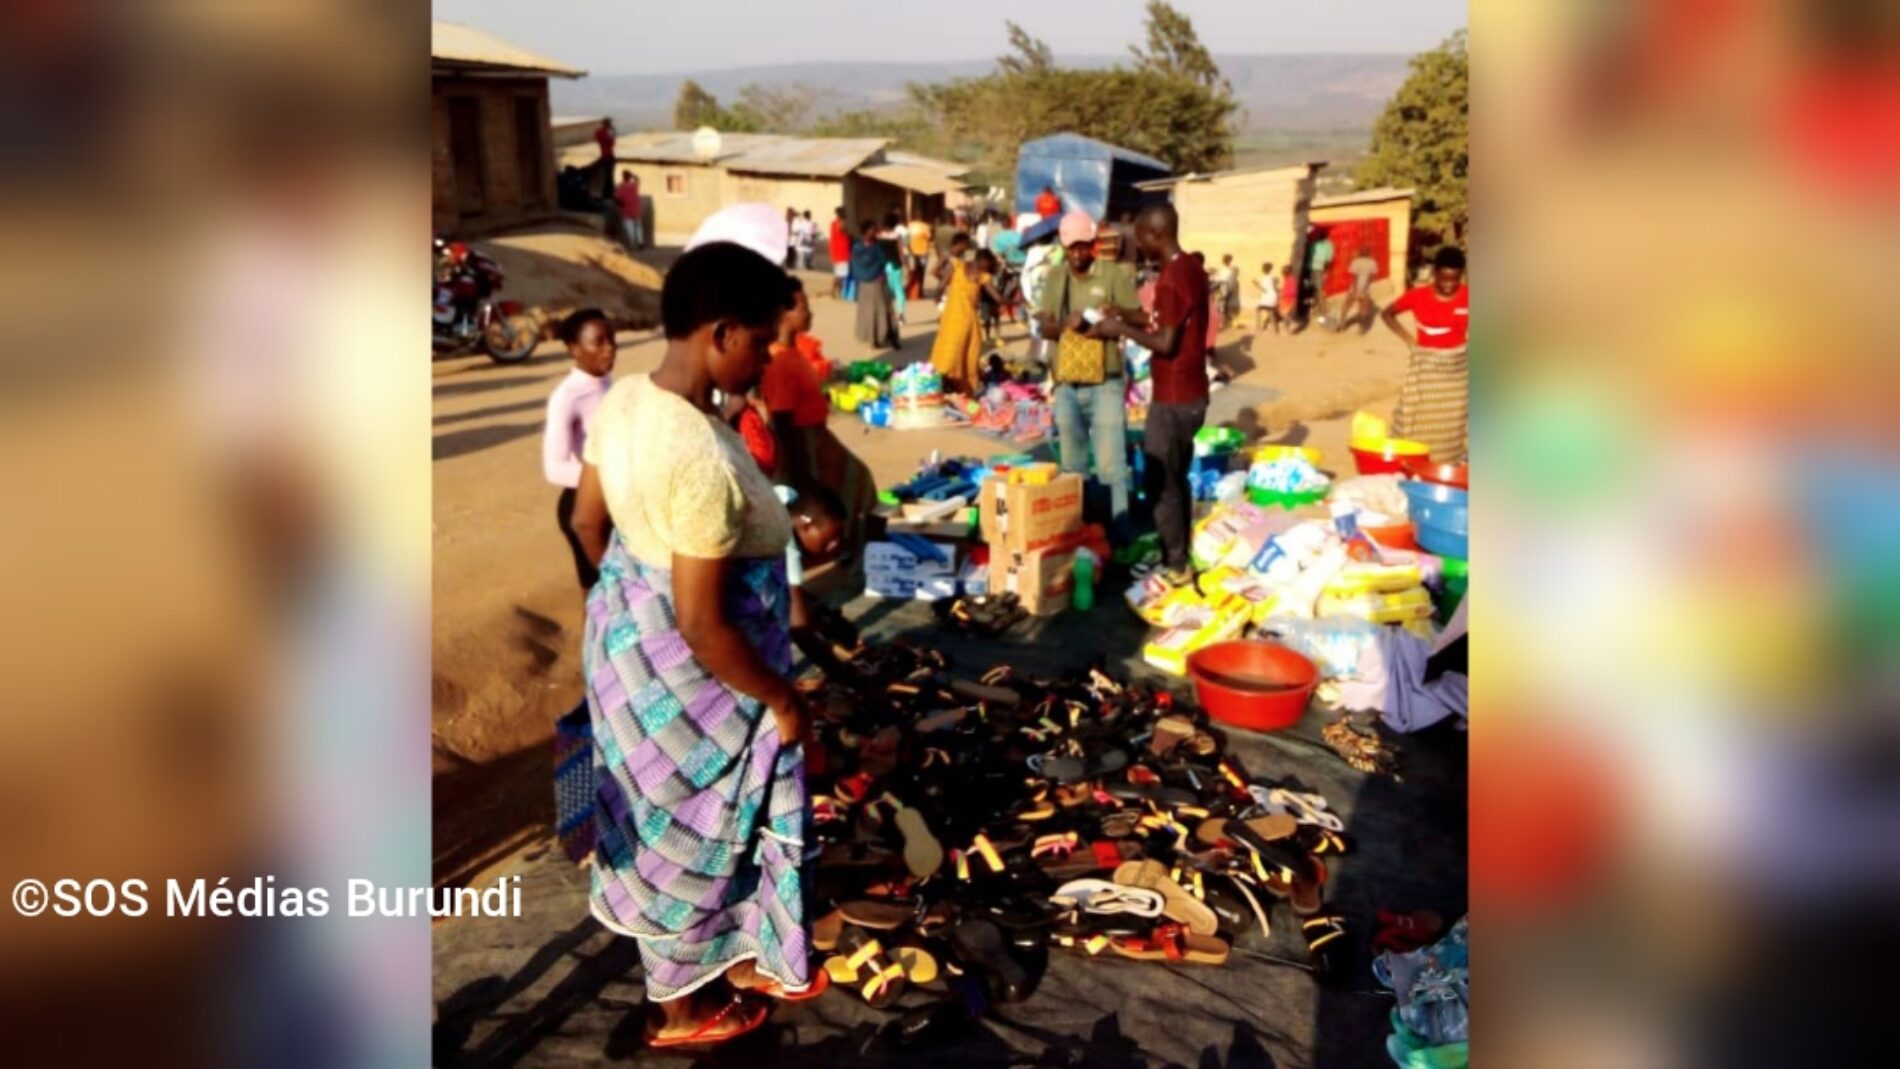 Mahama (Rwanda) : repetitive shortage of cooking gas stocks